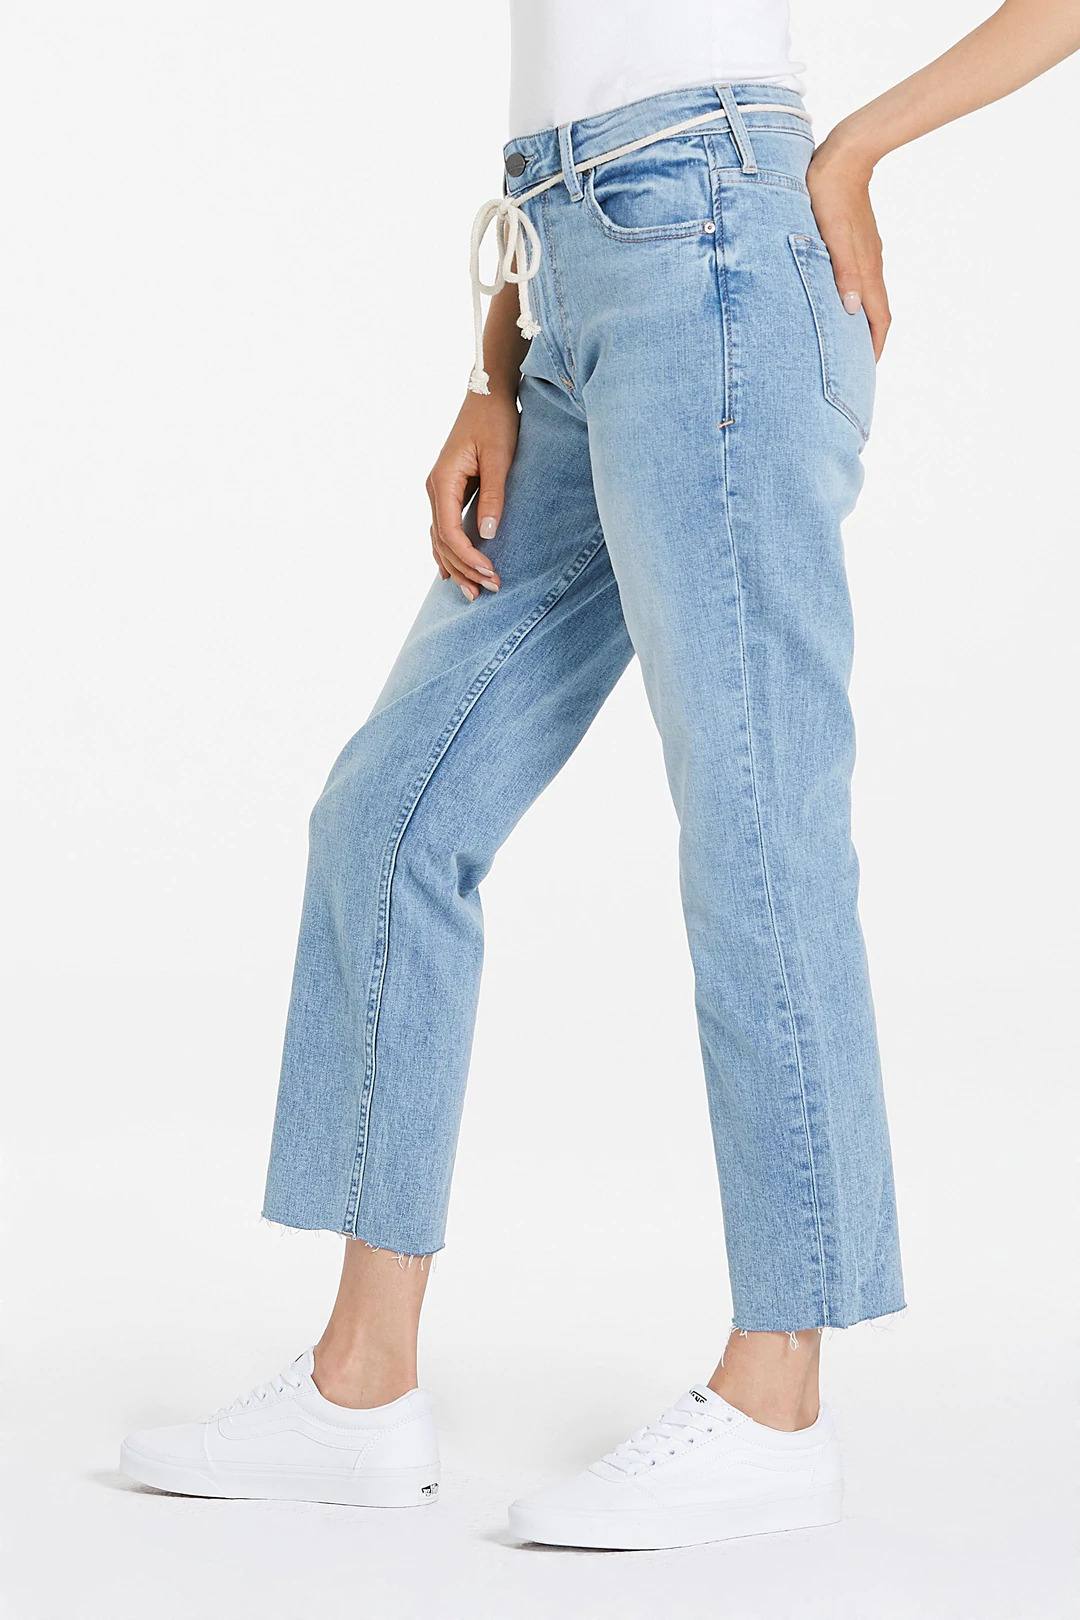 Dear John Denim Jodi High-Rise Cropped Straight Geneva Jeans side.